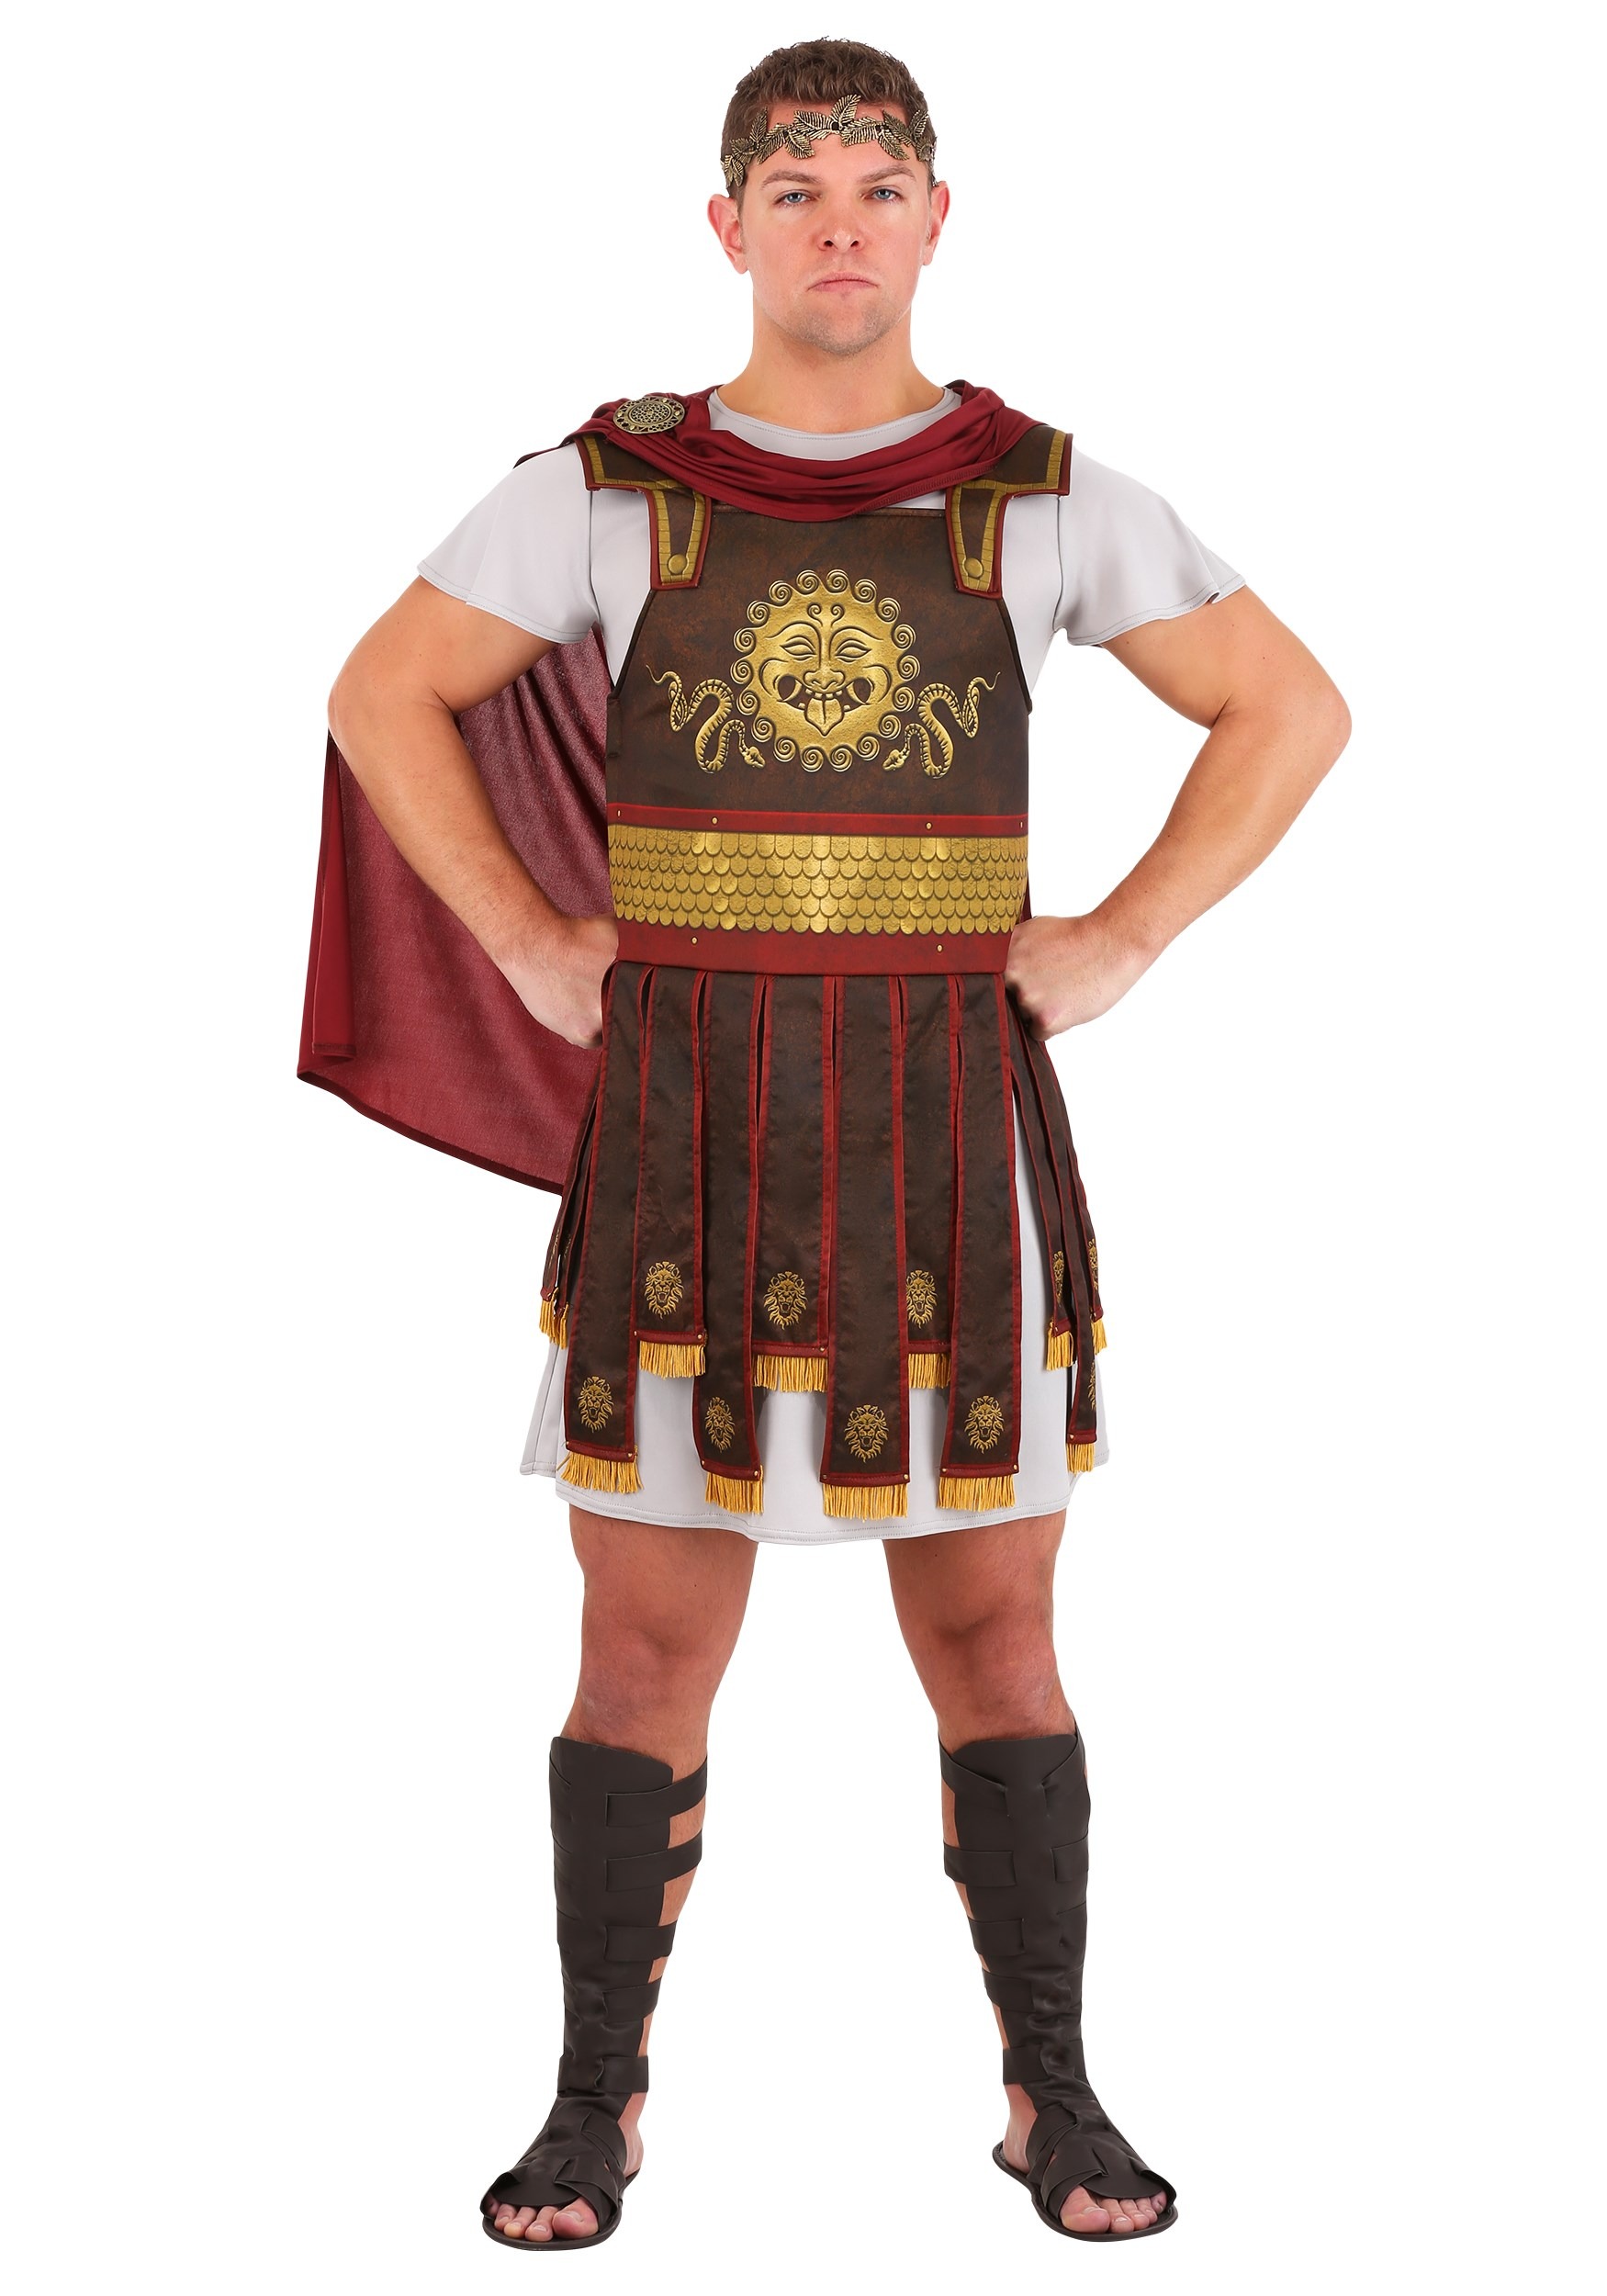 Photos - Fancy Dress Roman FUN Costumes  Warrior Men's Costume Orange/Red/Gray 